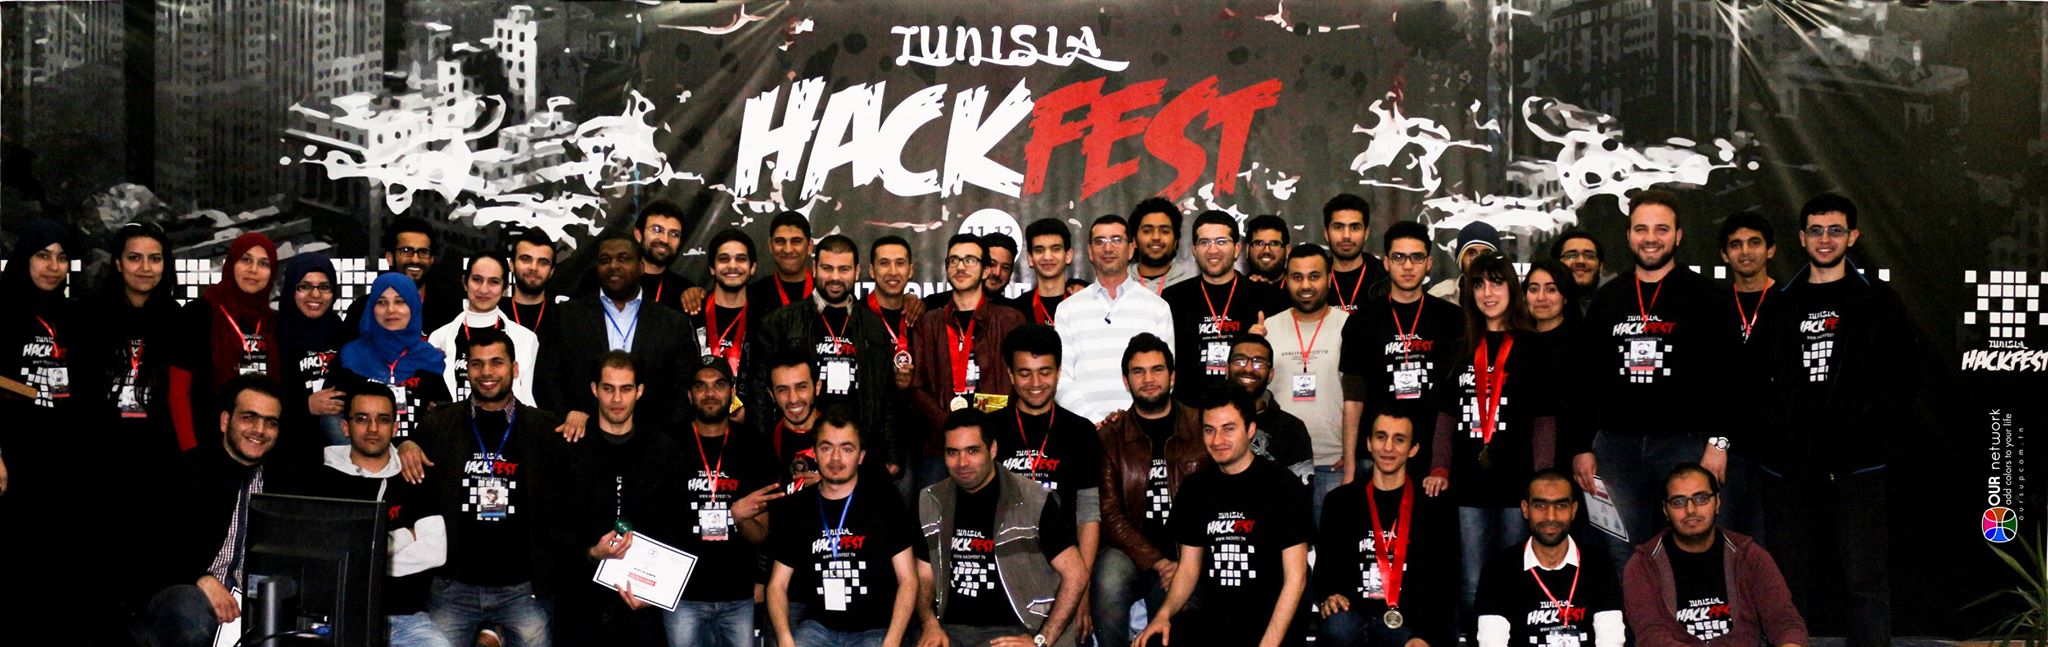 Hackfest 2015 archve